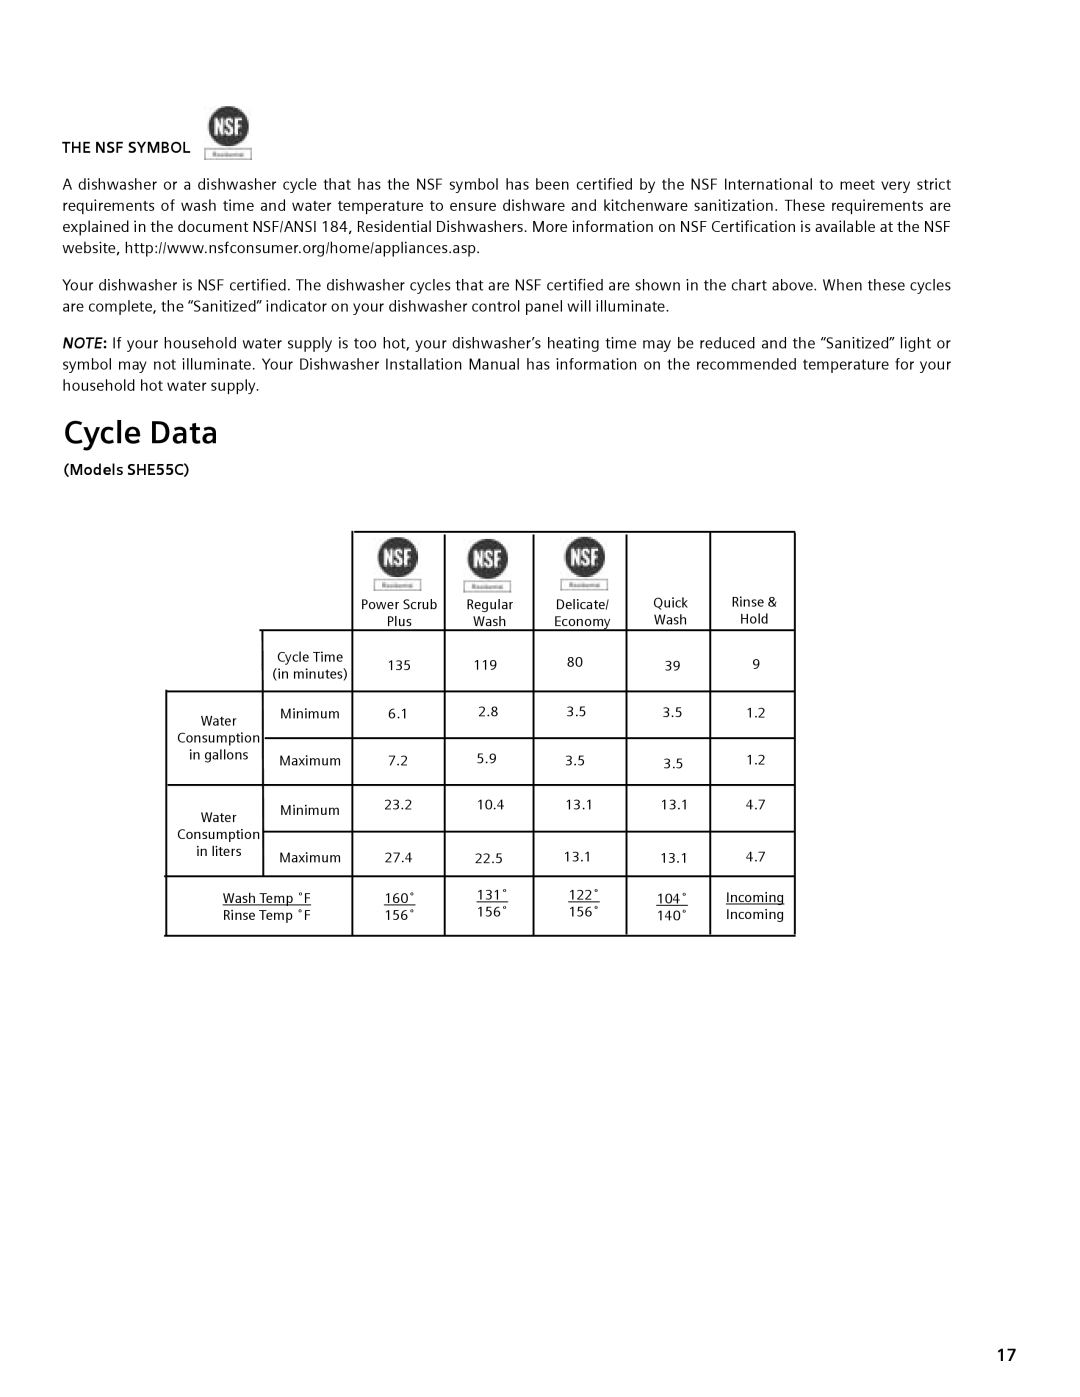 Compaq manual Cycle Data, The NSF Symbol, Models SHE55C 